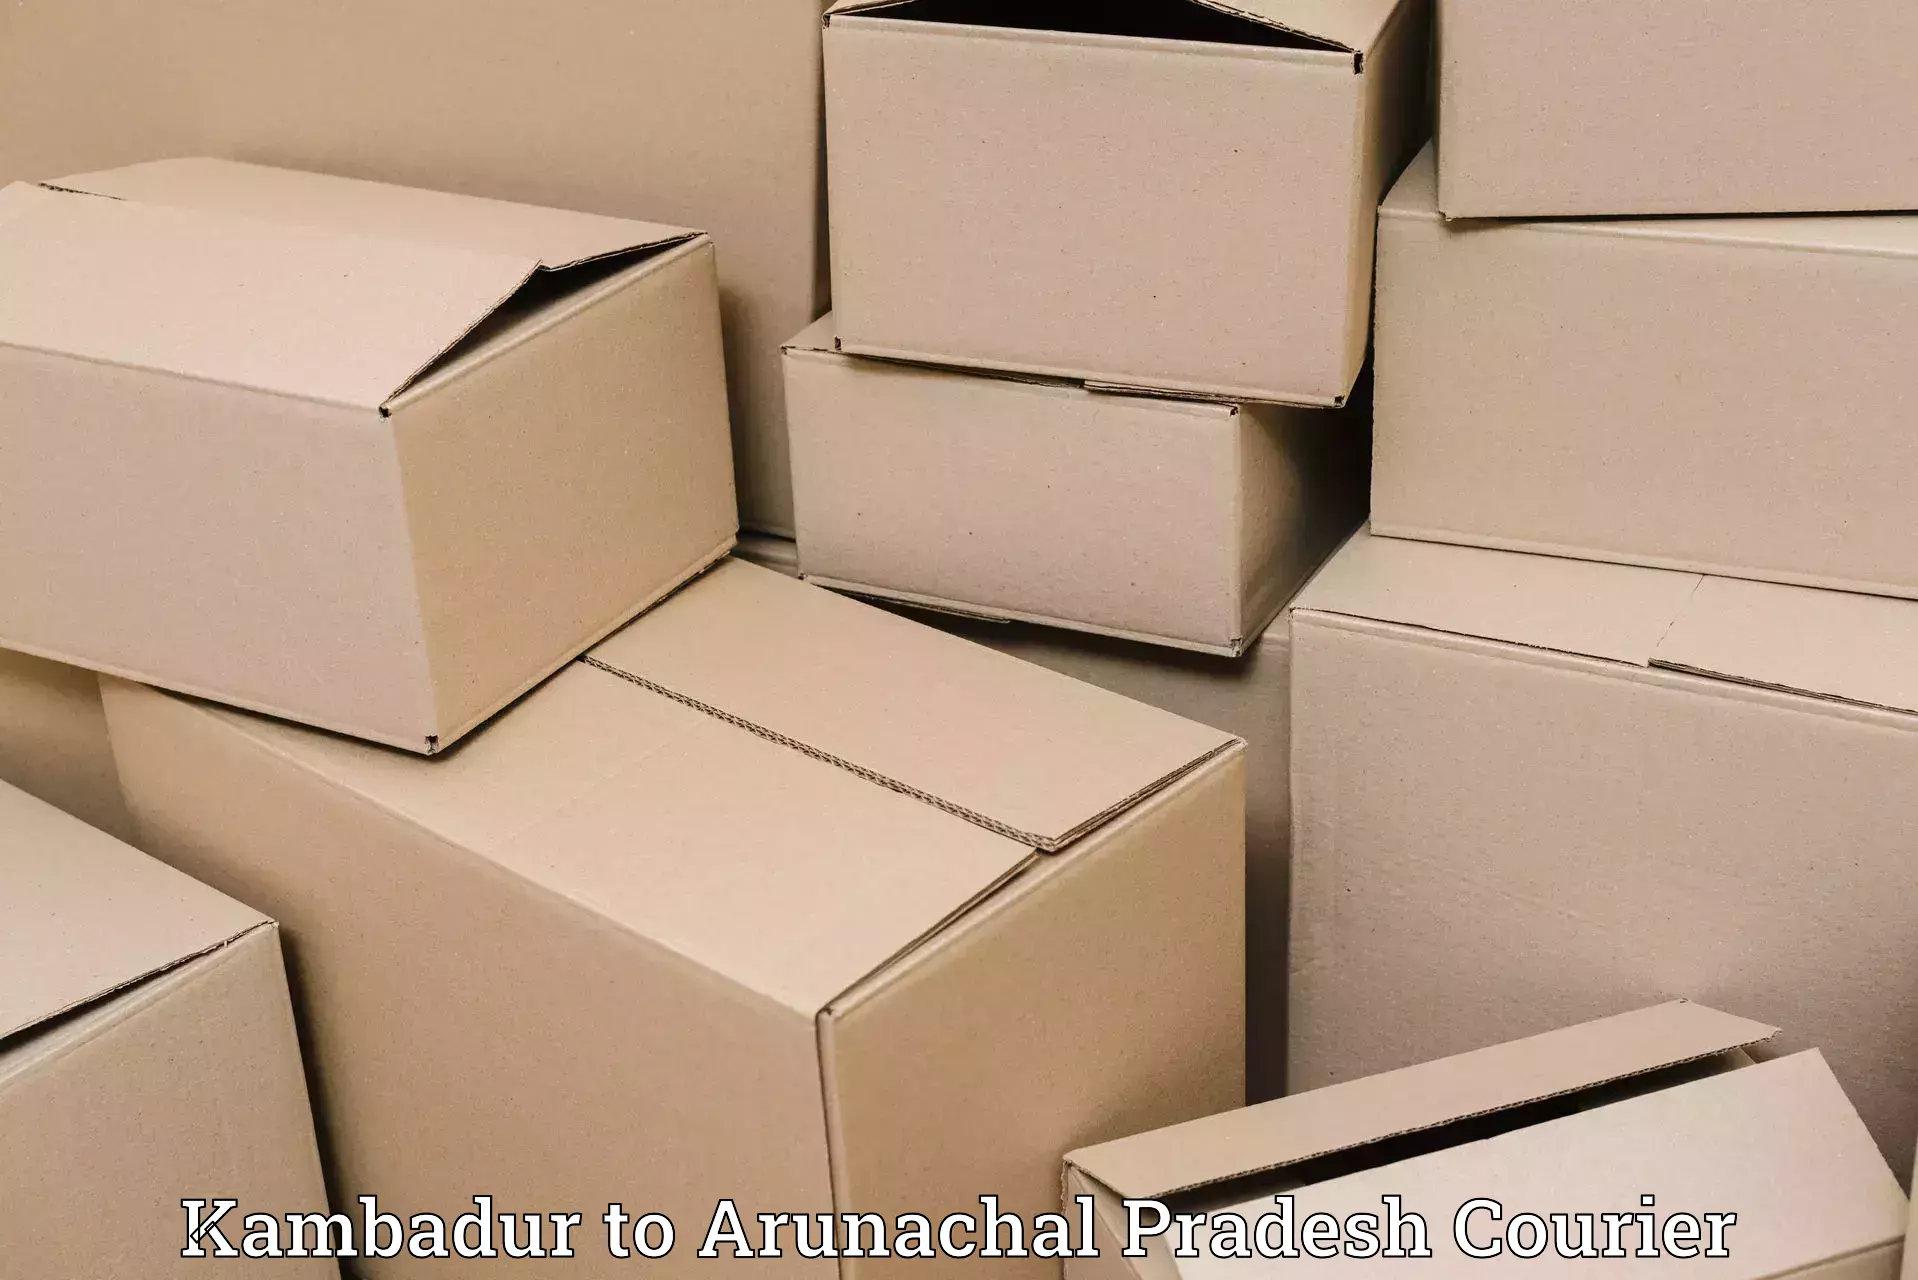 Logistics efficiency Kambadur to Arunachal Pradesh